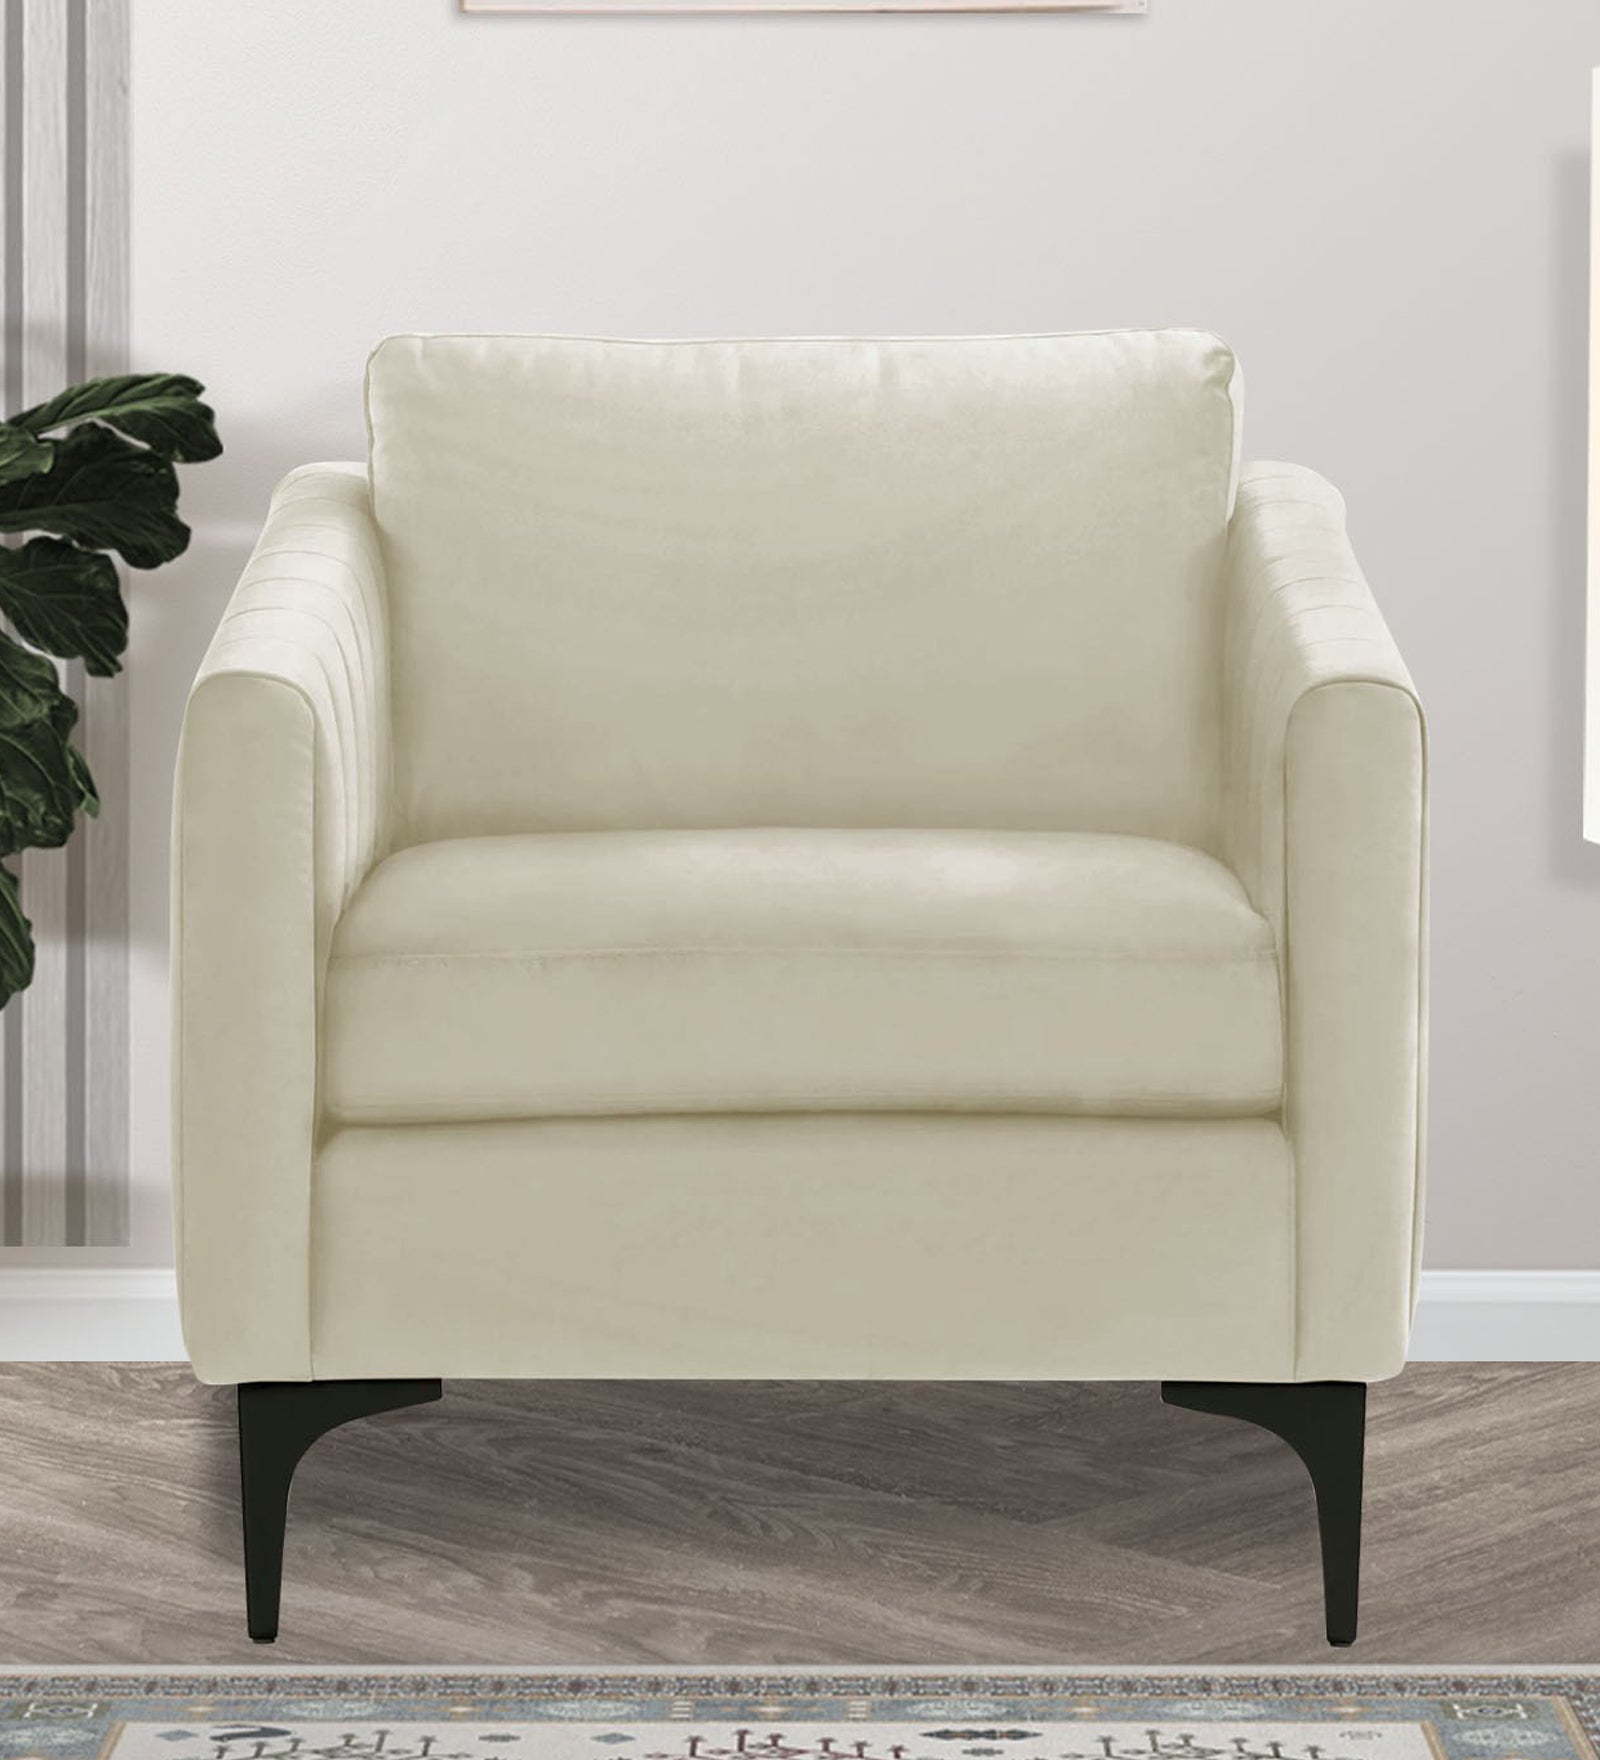 Haru Velvet 1 Seater Sofa in Warm White Colour